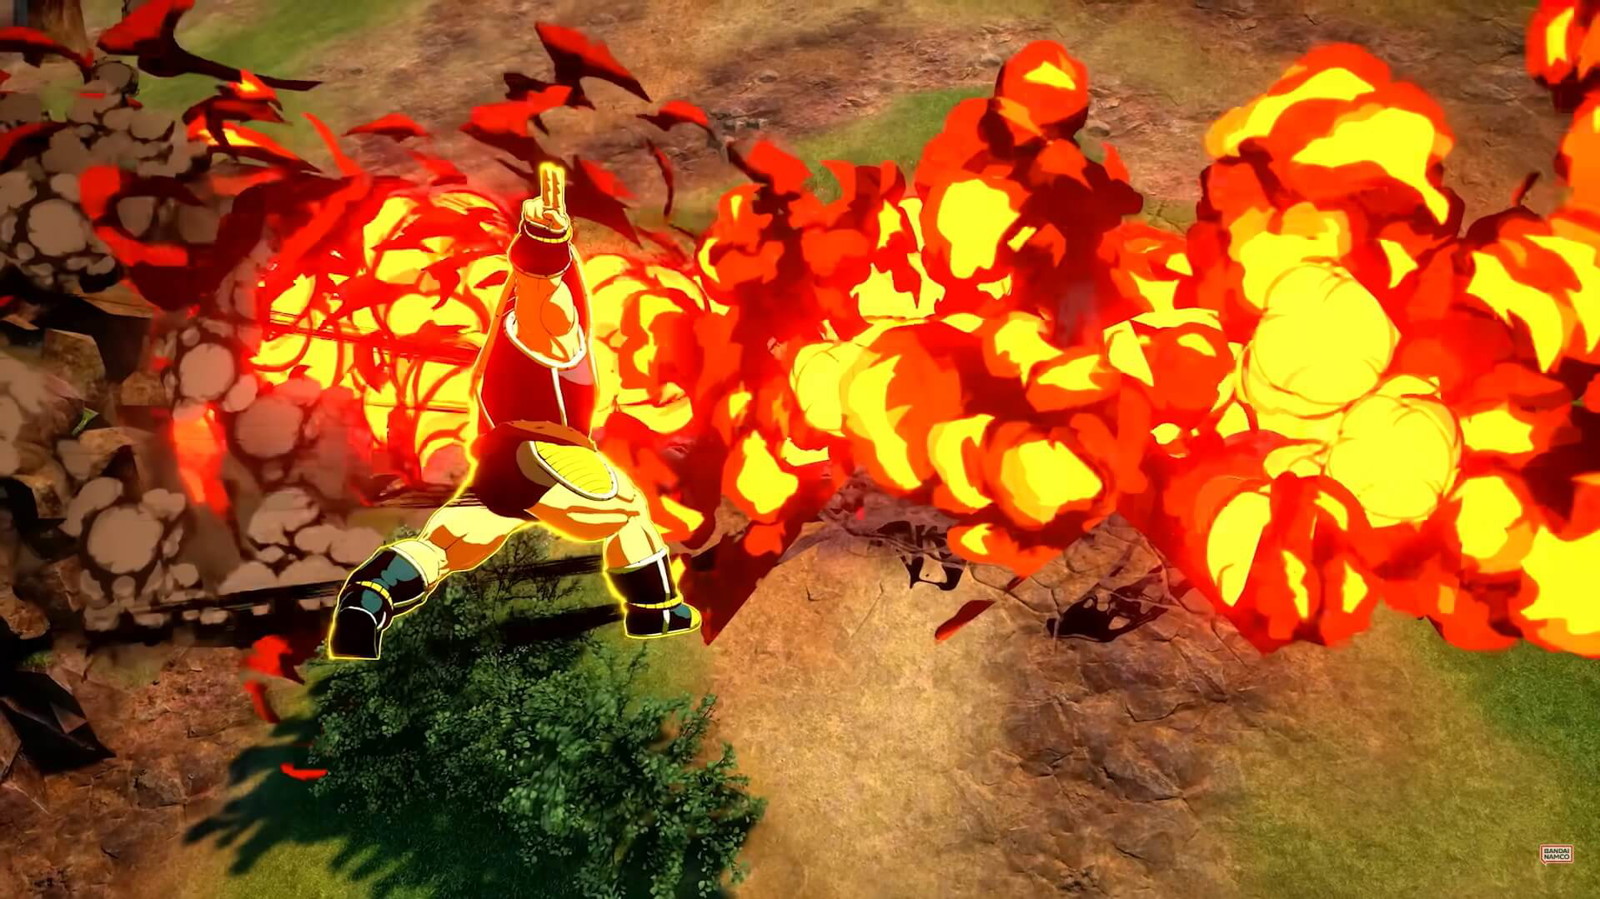 Nappa is seen attacking Tien Shinhan in Dragon Ball: Sparking Zero. Credits: Bandai Namco